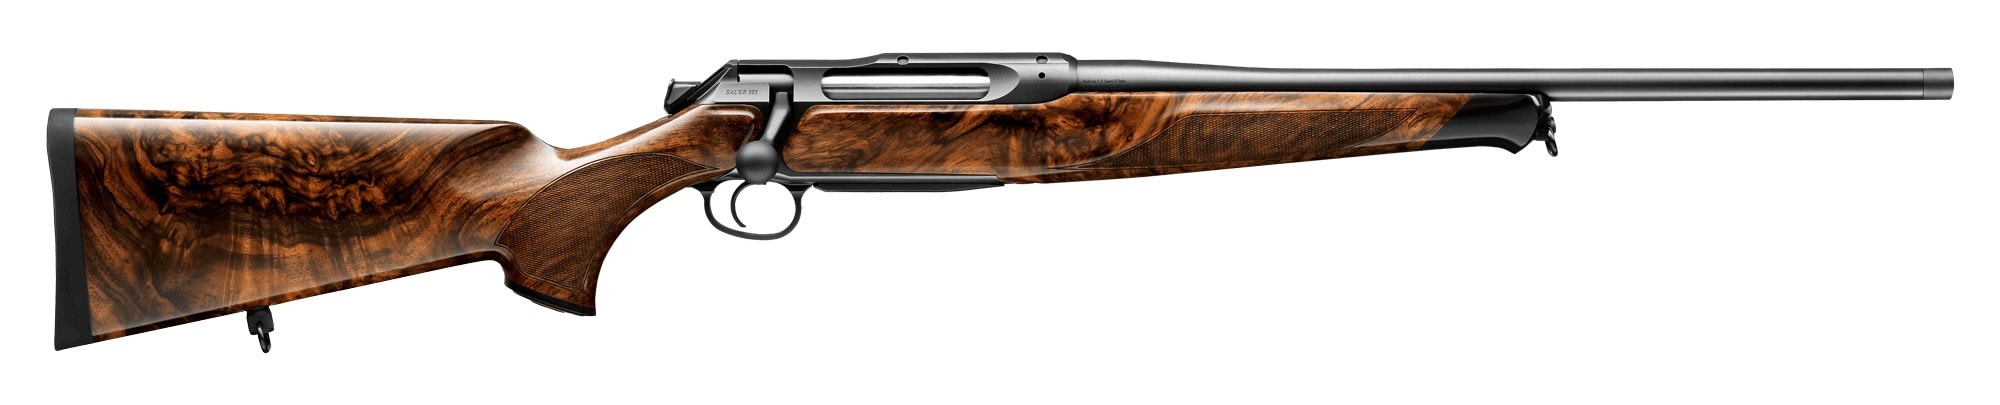 Sauer 505 Wood Rifle komplett